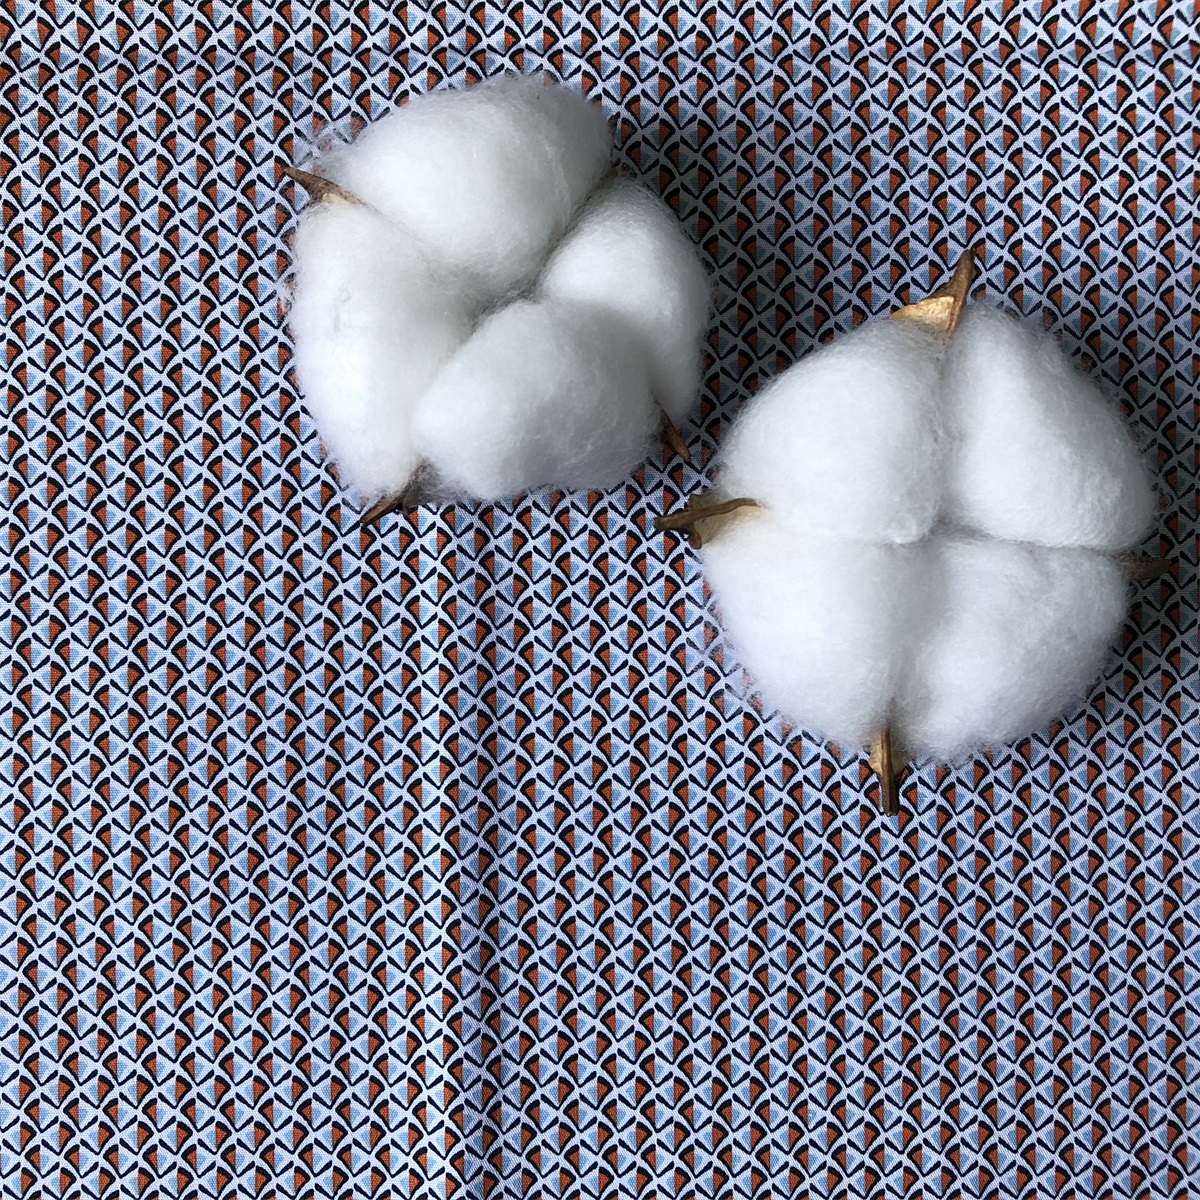 Sun-rising Textile Cotton Printed fabric 50S compact yarn soft men's shirts 100% cotton poplin printed shirts woven fabric